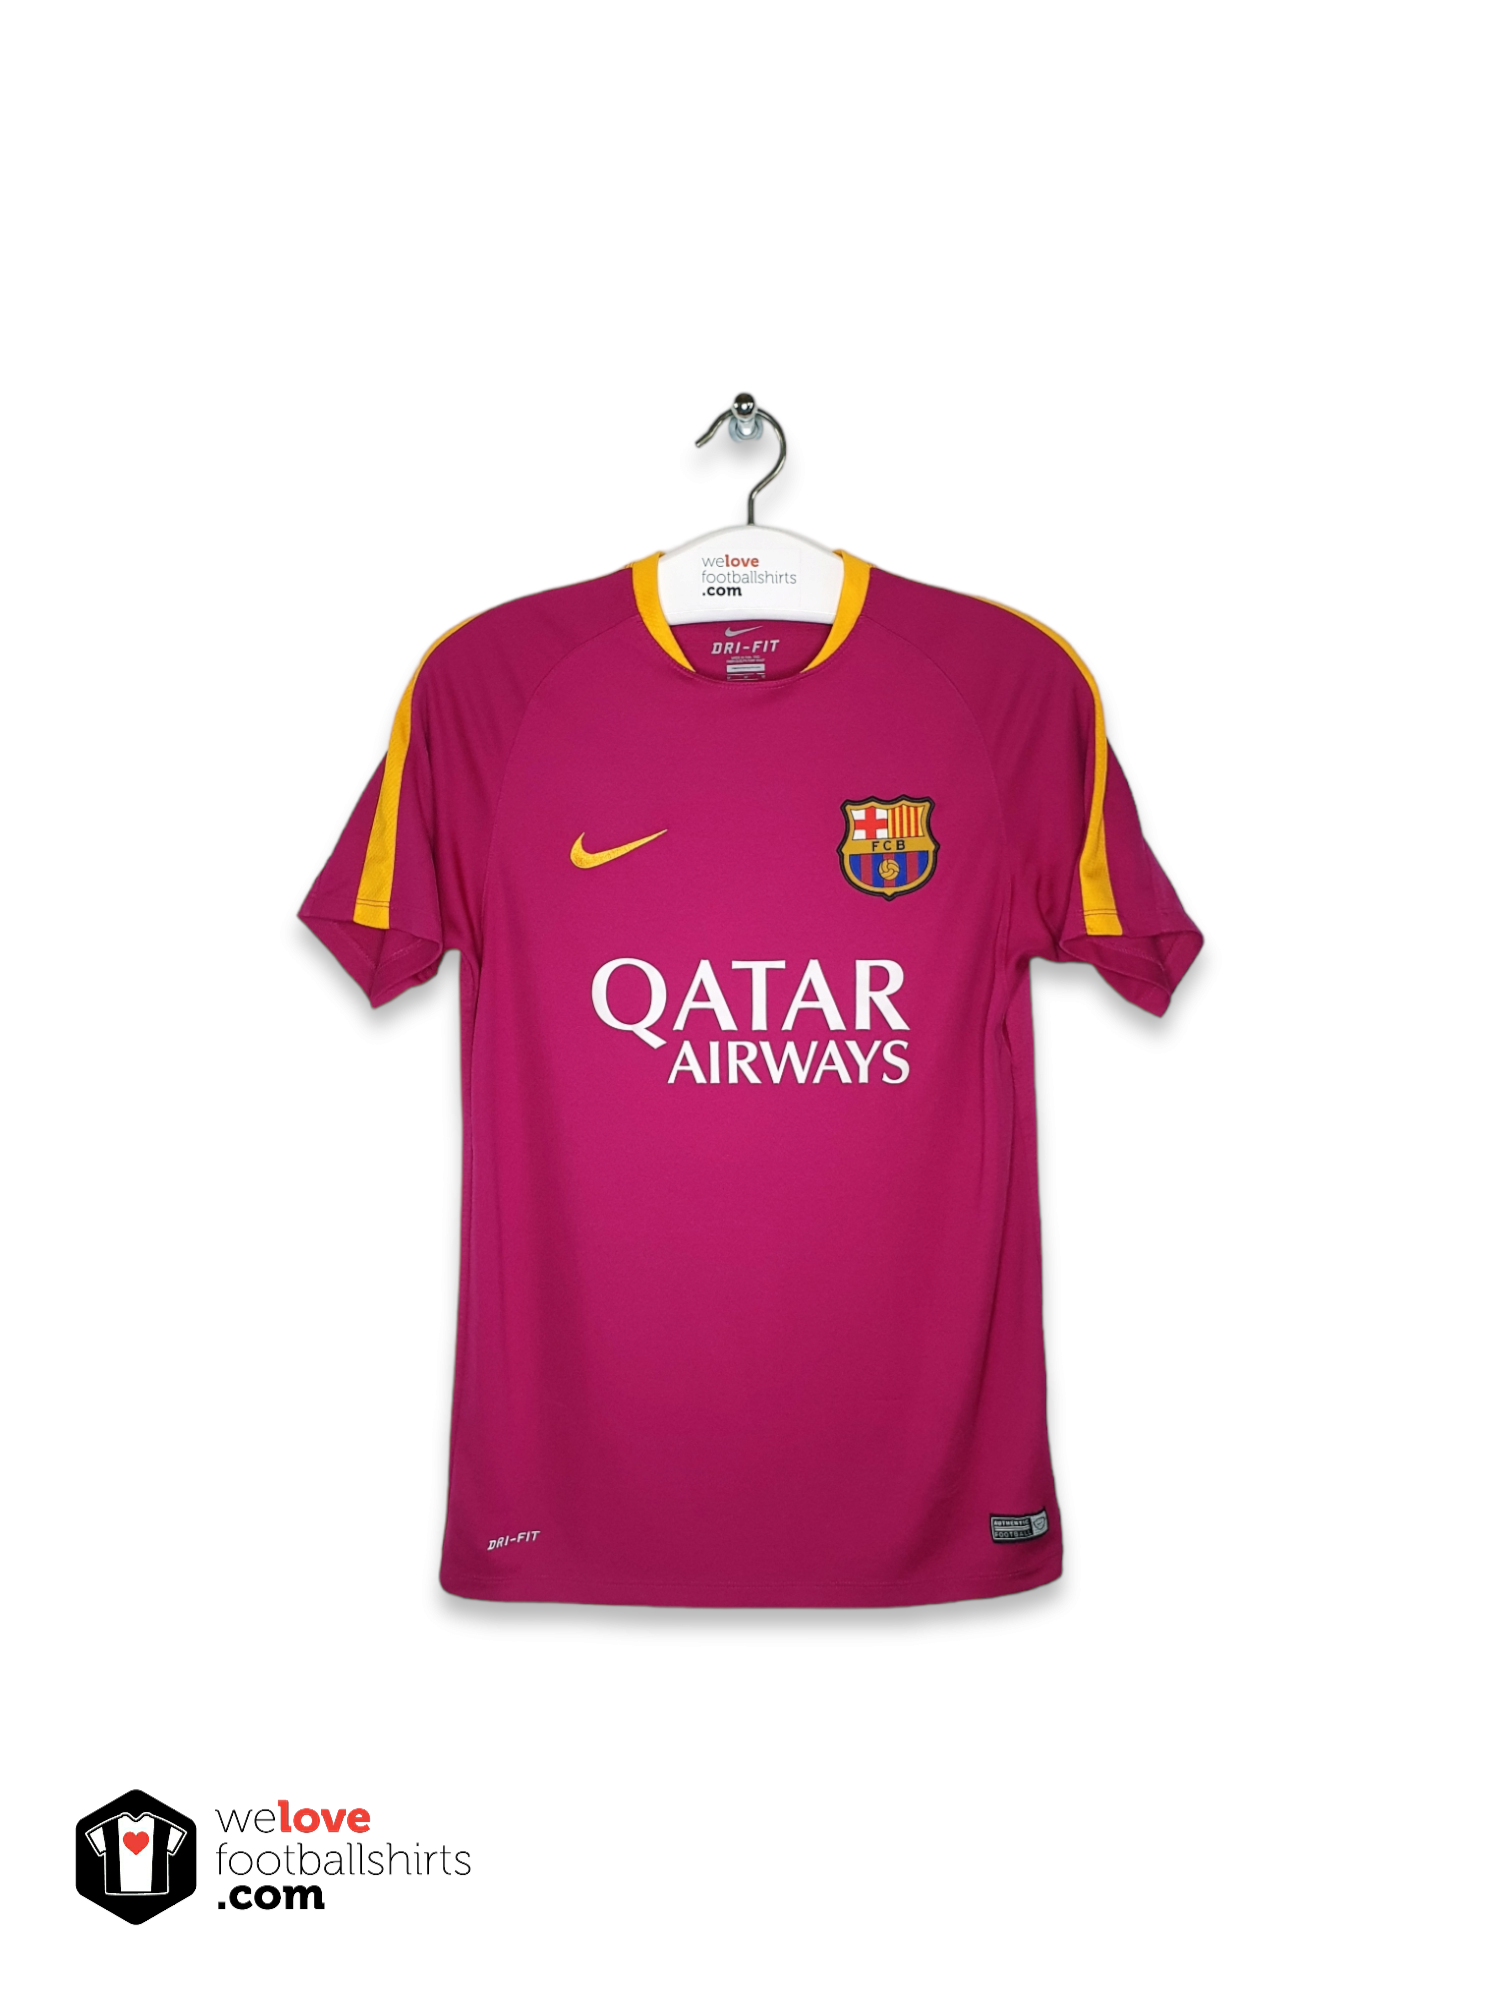 Reflectie masker Denken Nike trainingsshirt FC Barcelona 2015/16 - Welovefootballshirts.com